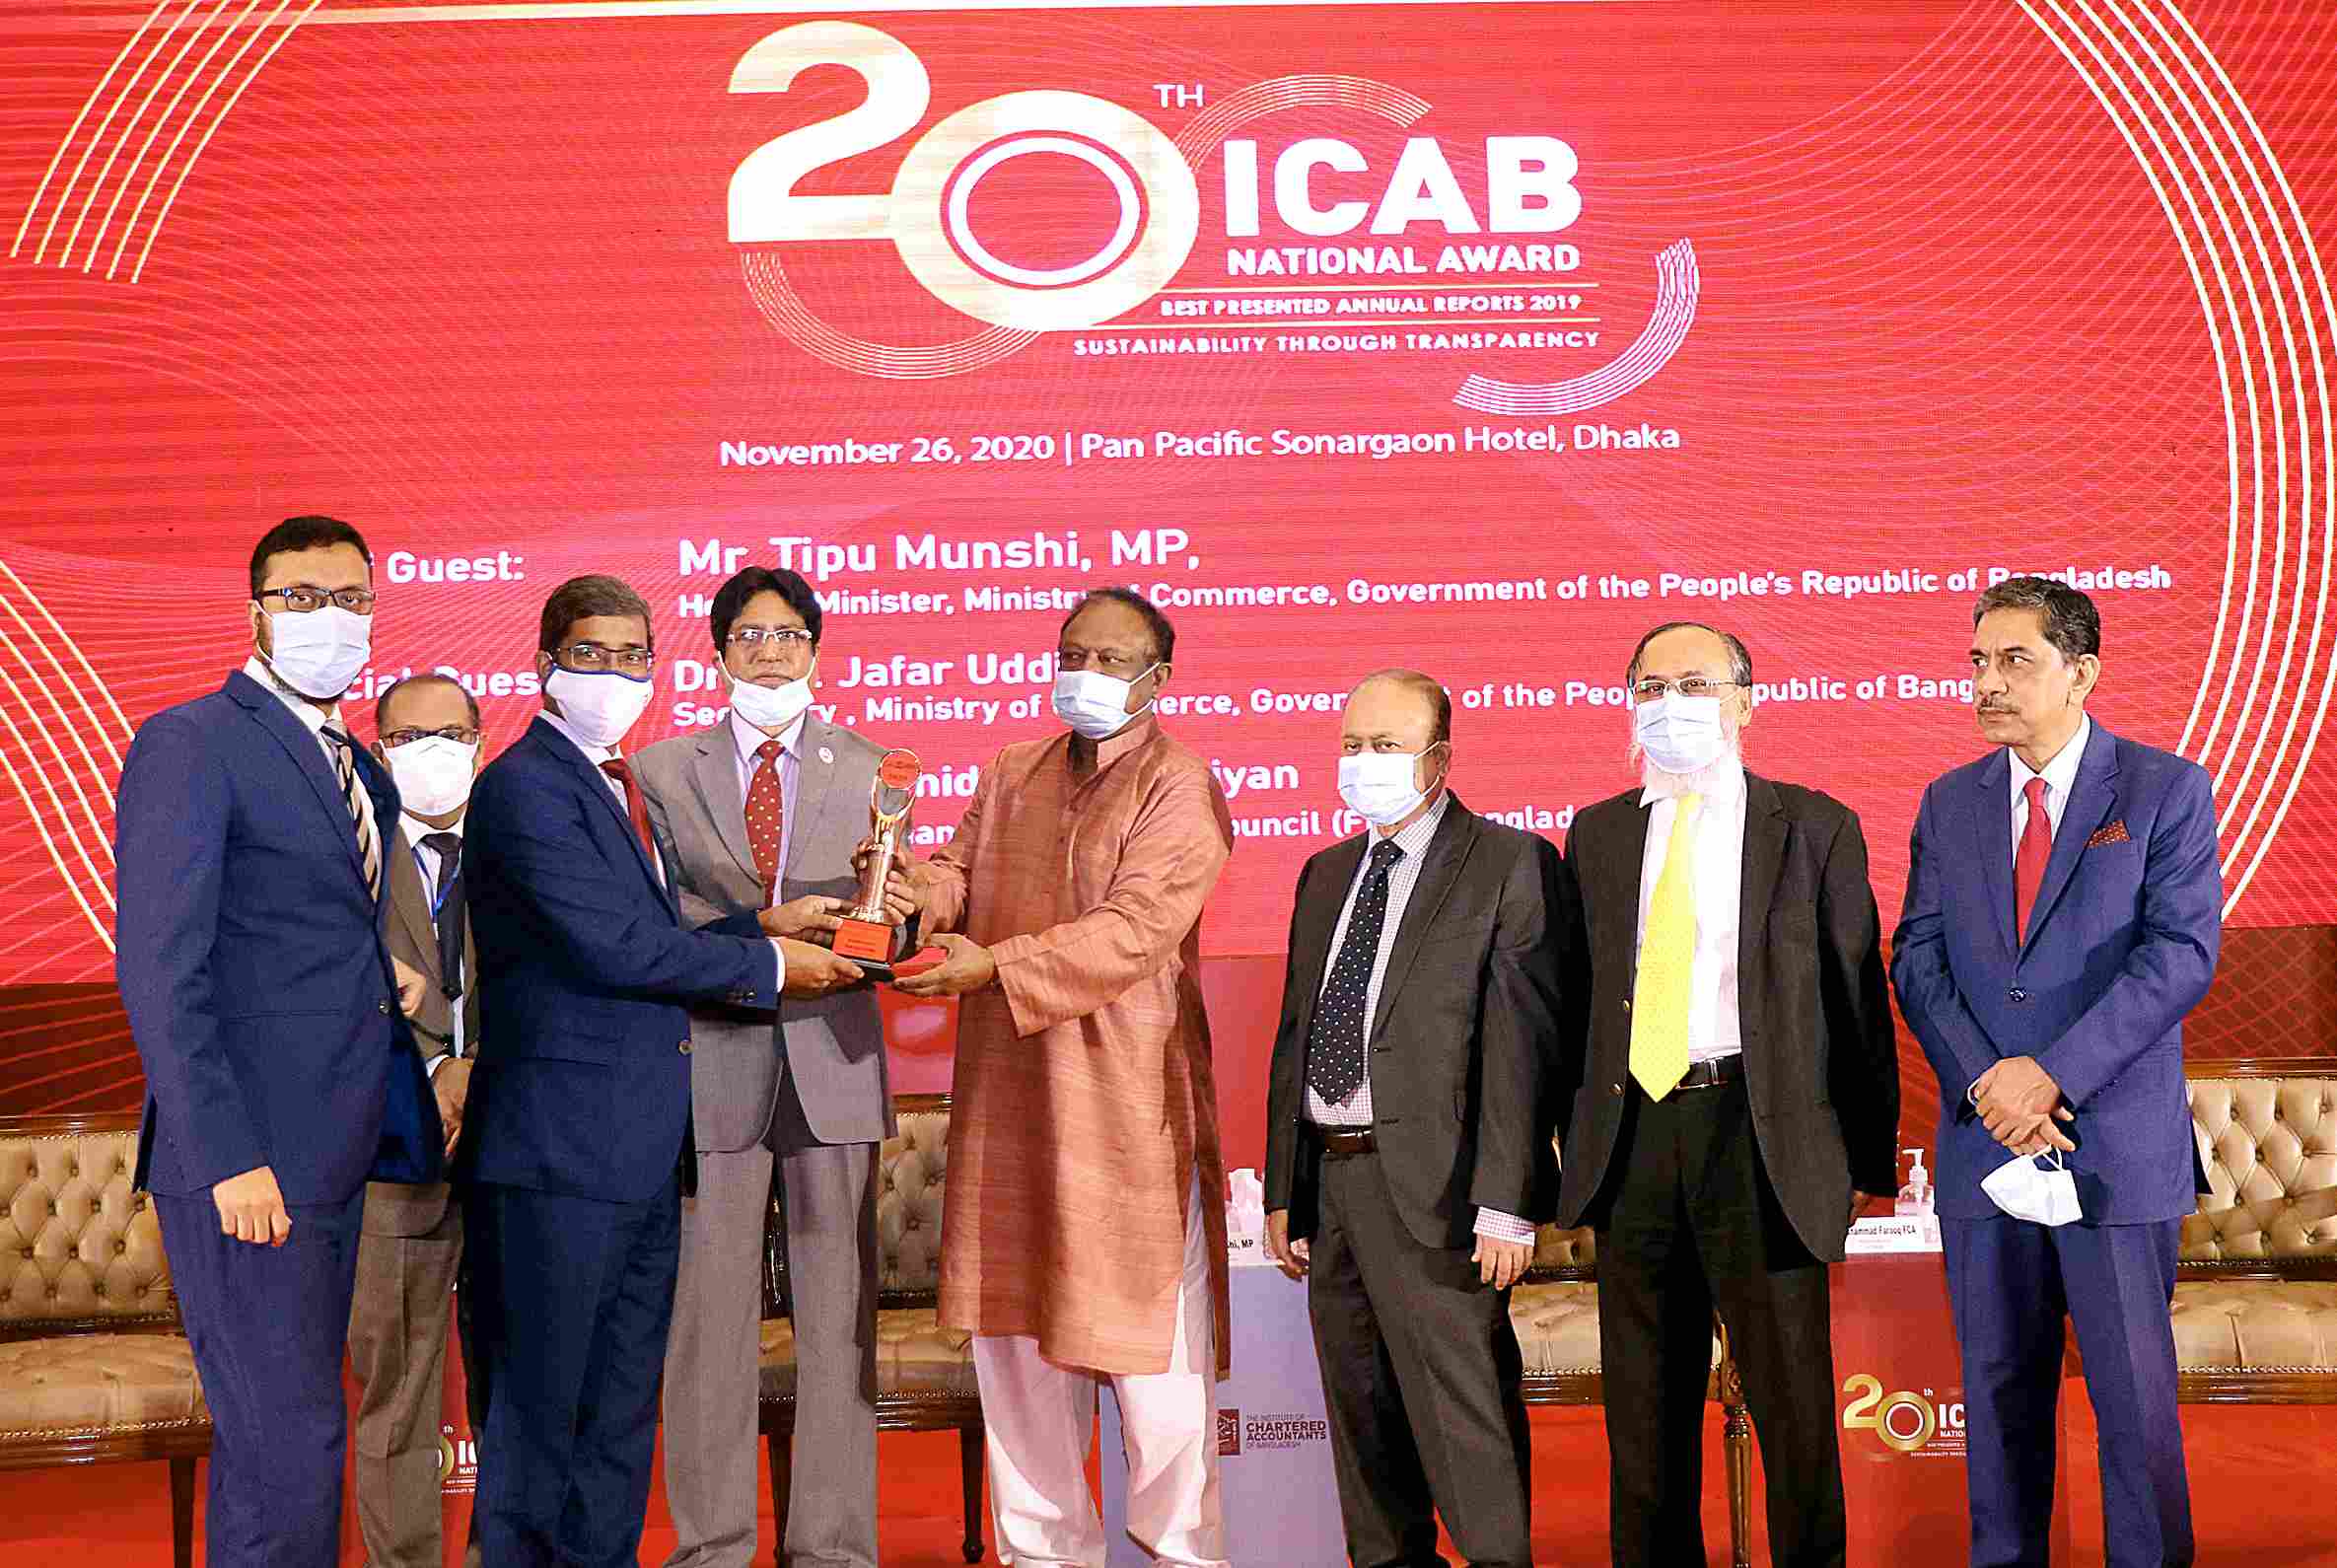 Bank-Asia-won-the-20th-ICAB-National-Award